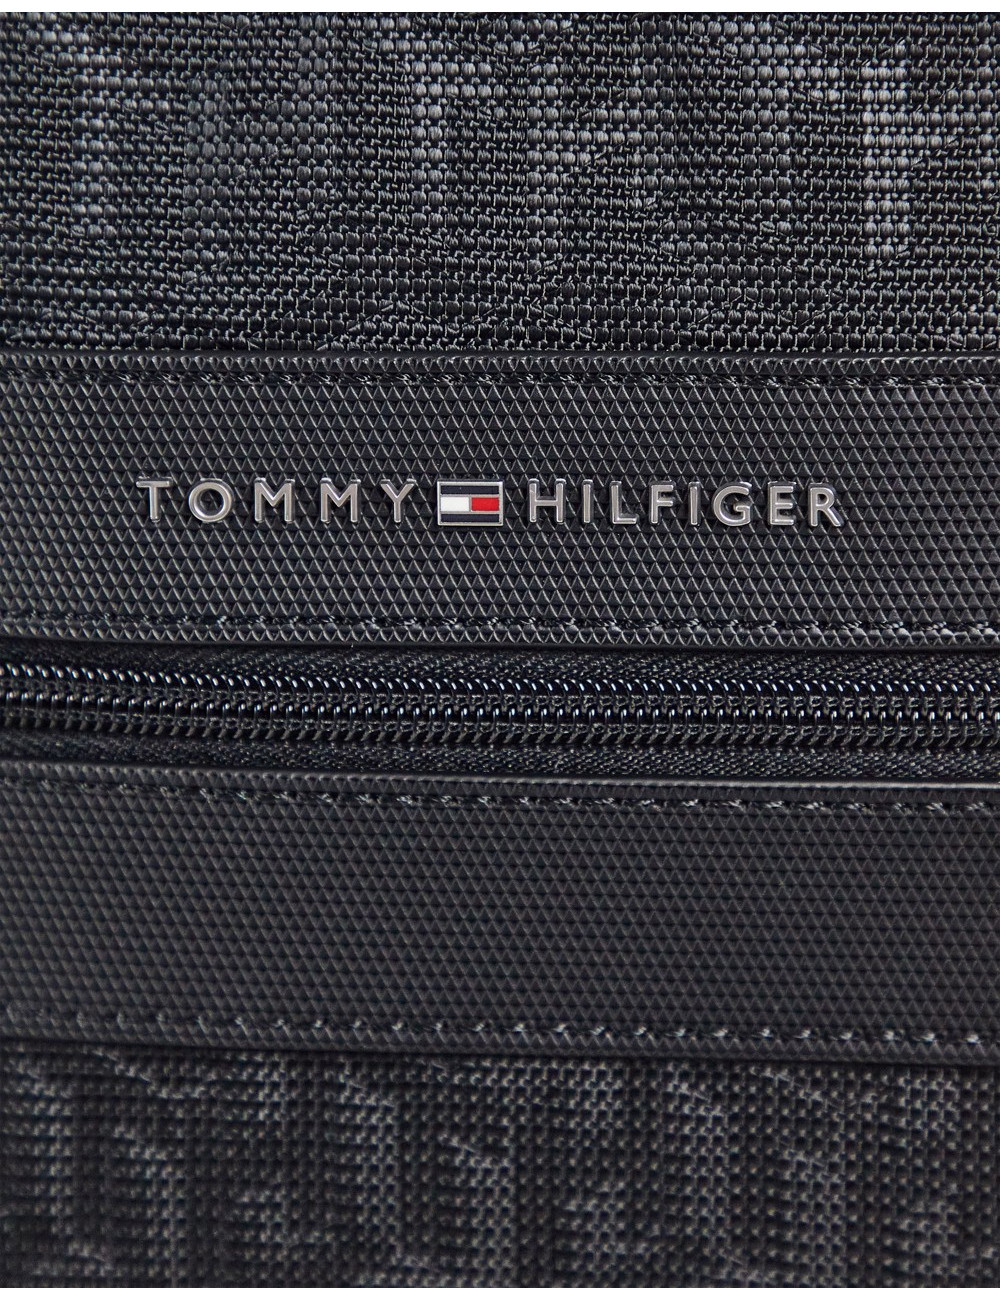 Tommy Hilfiger monogram...